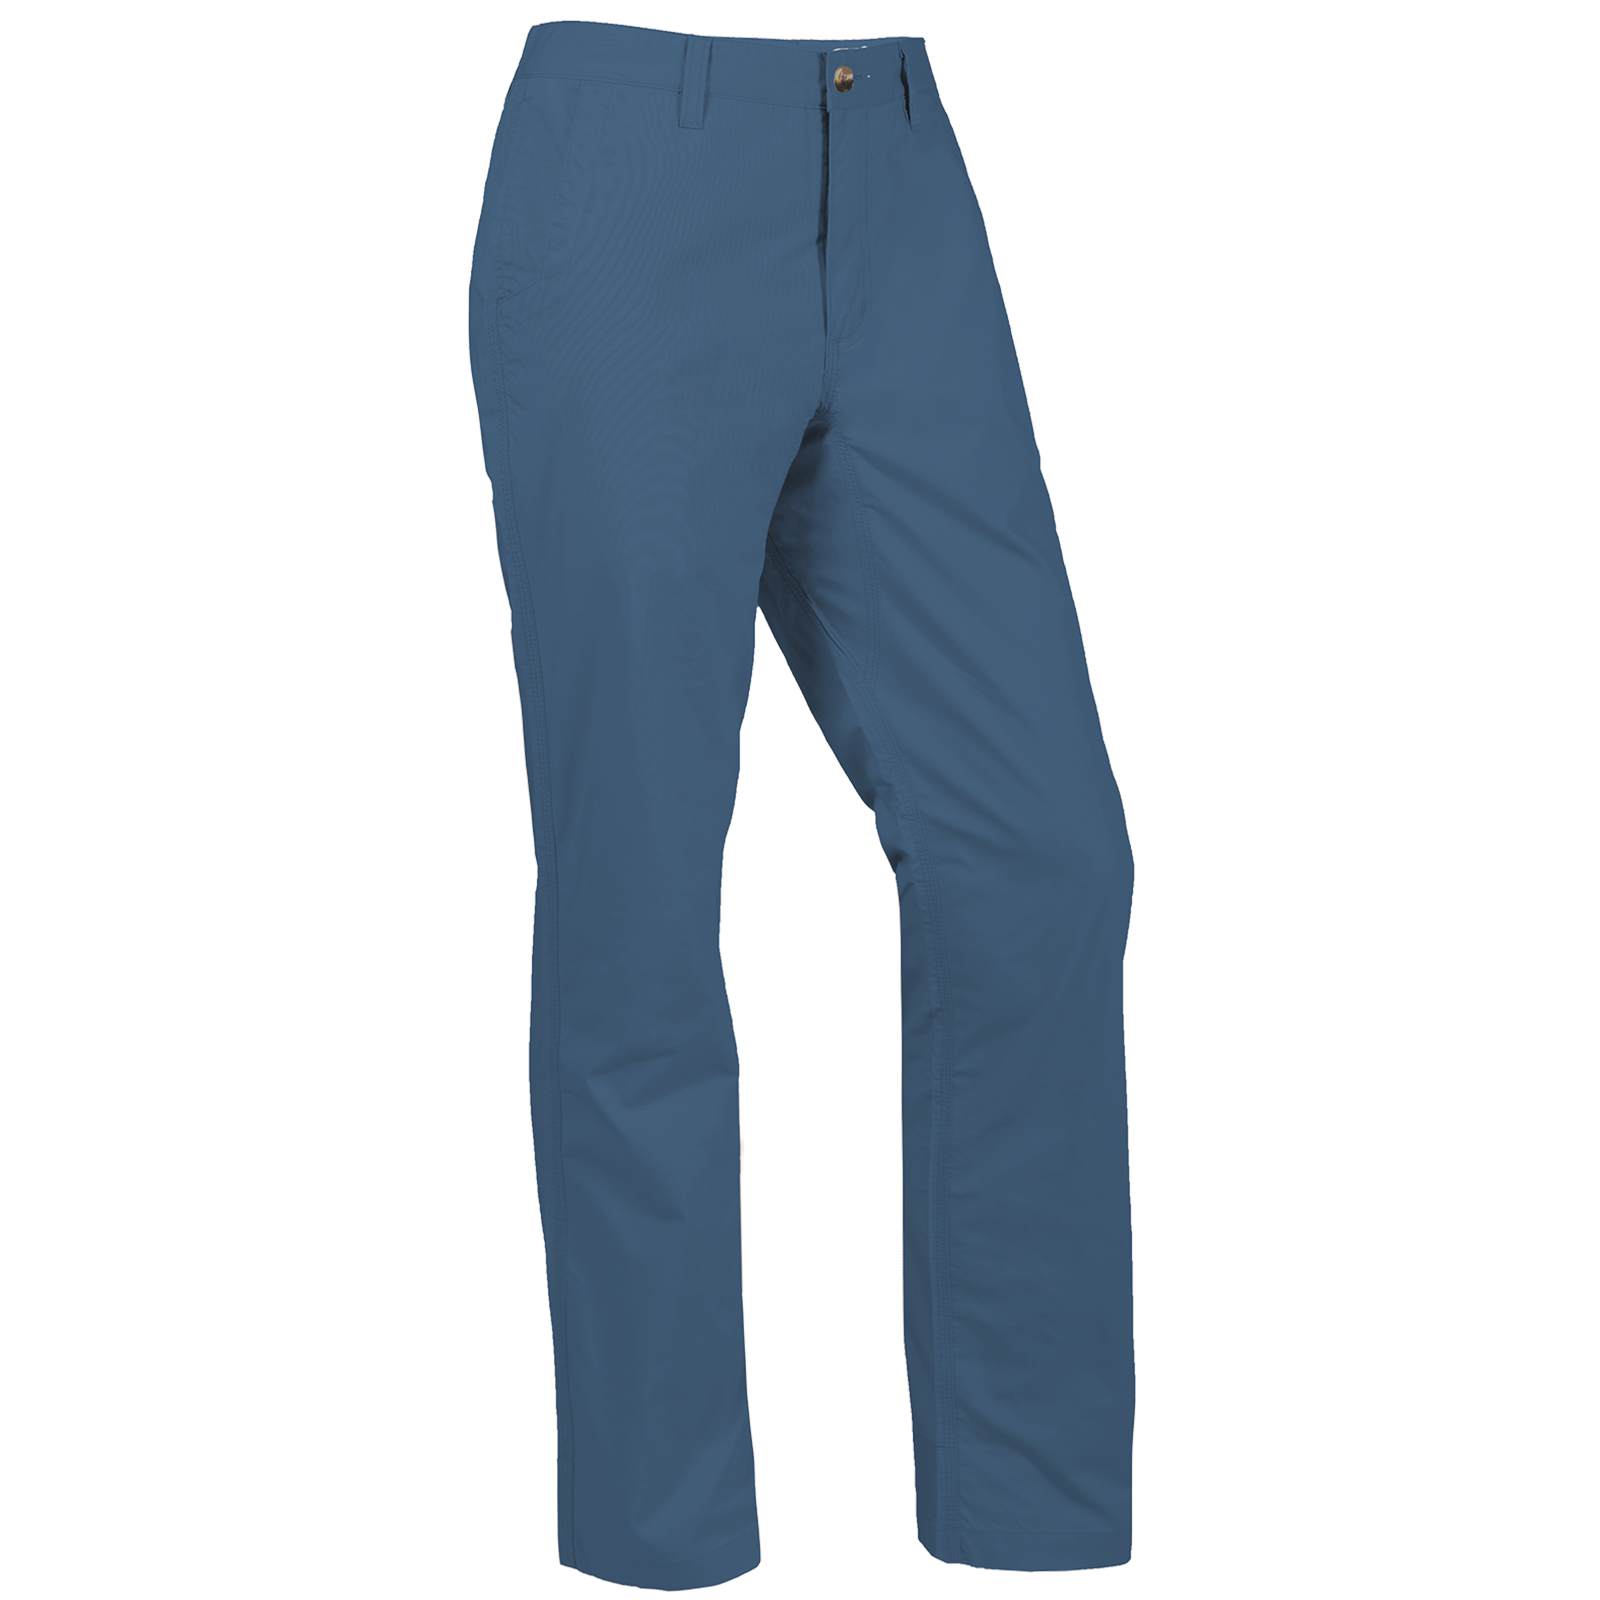 Men's Pants: Khakis, Chinos, Jeans & More